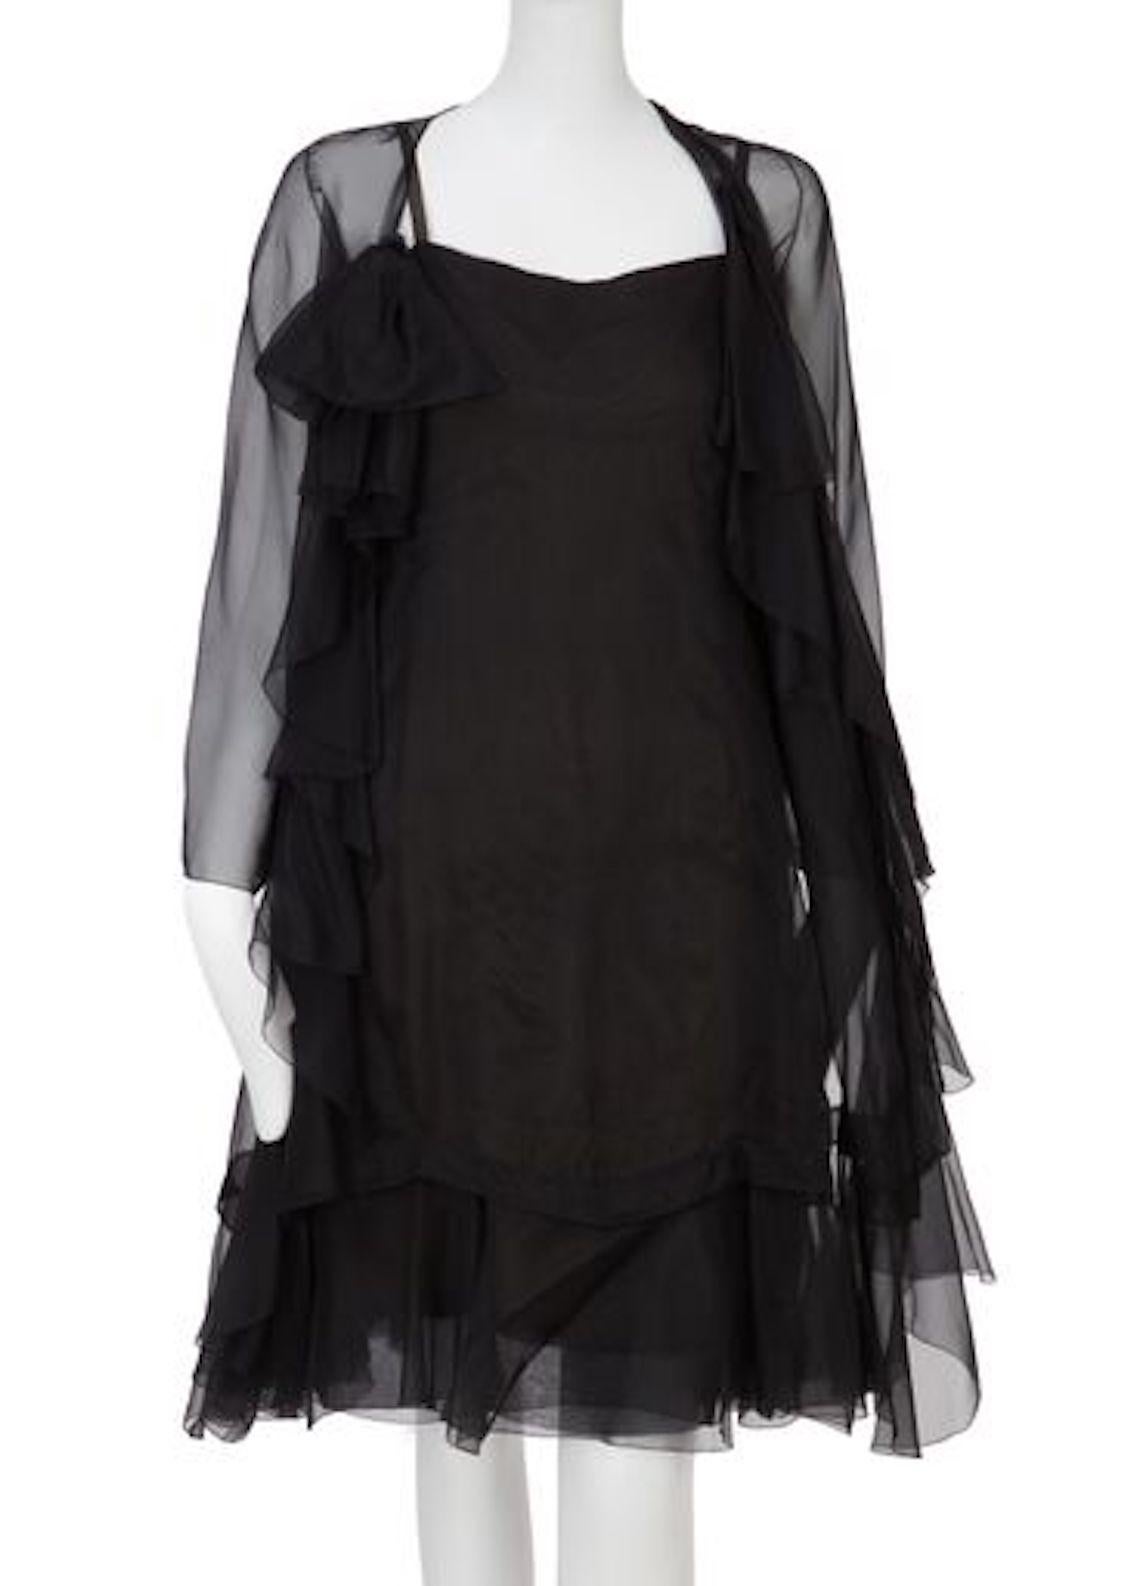 Women's Christian Dior, Black Chiffon dress with jacket, Spring/Summer 1966